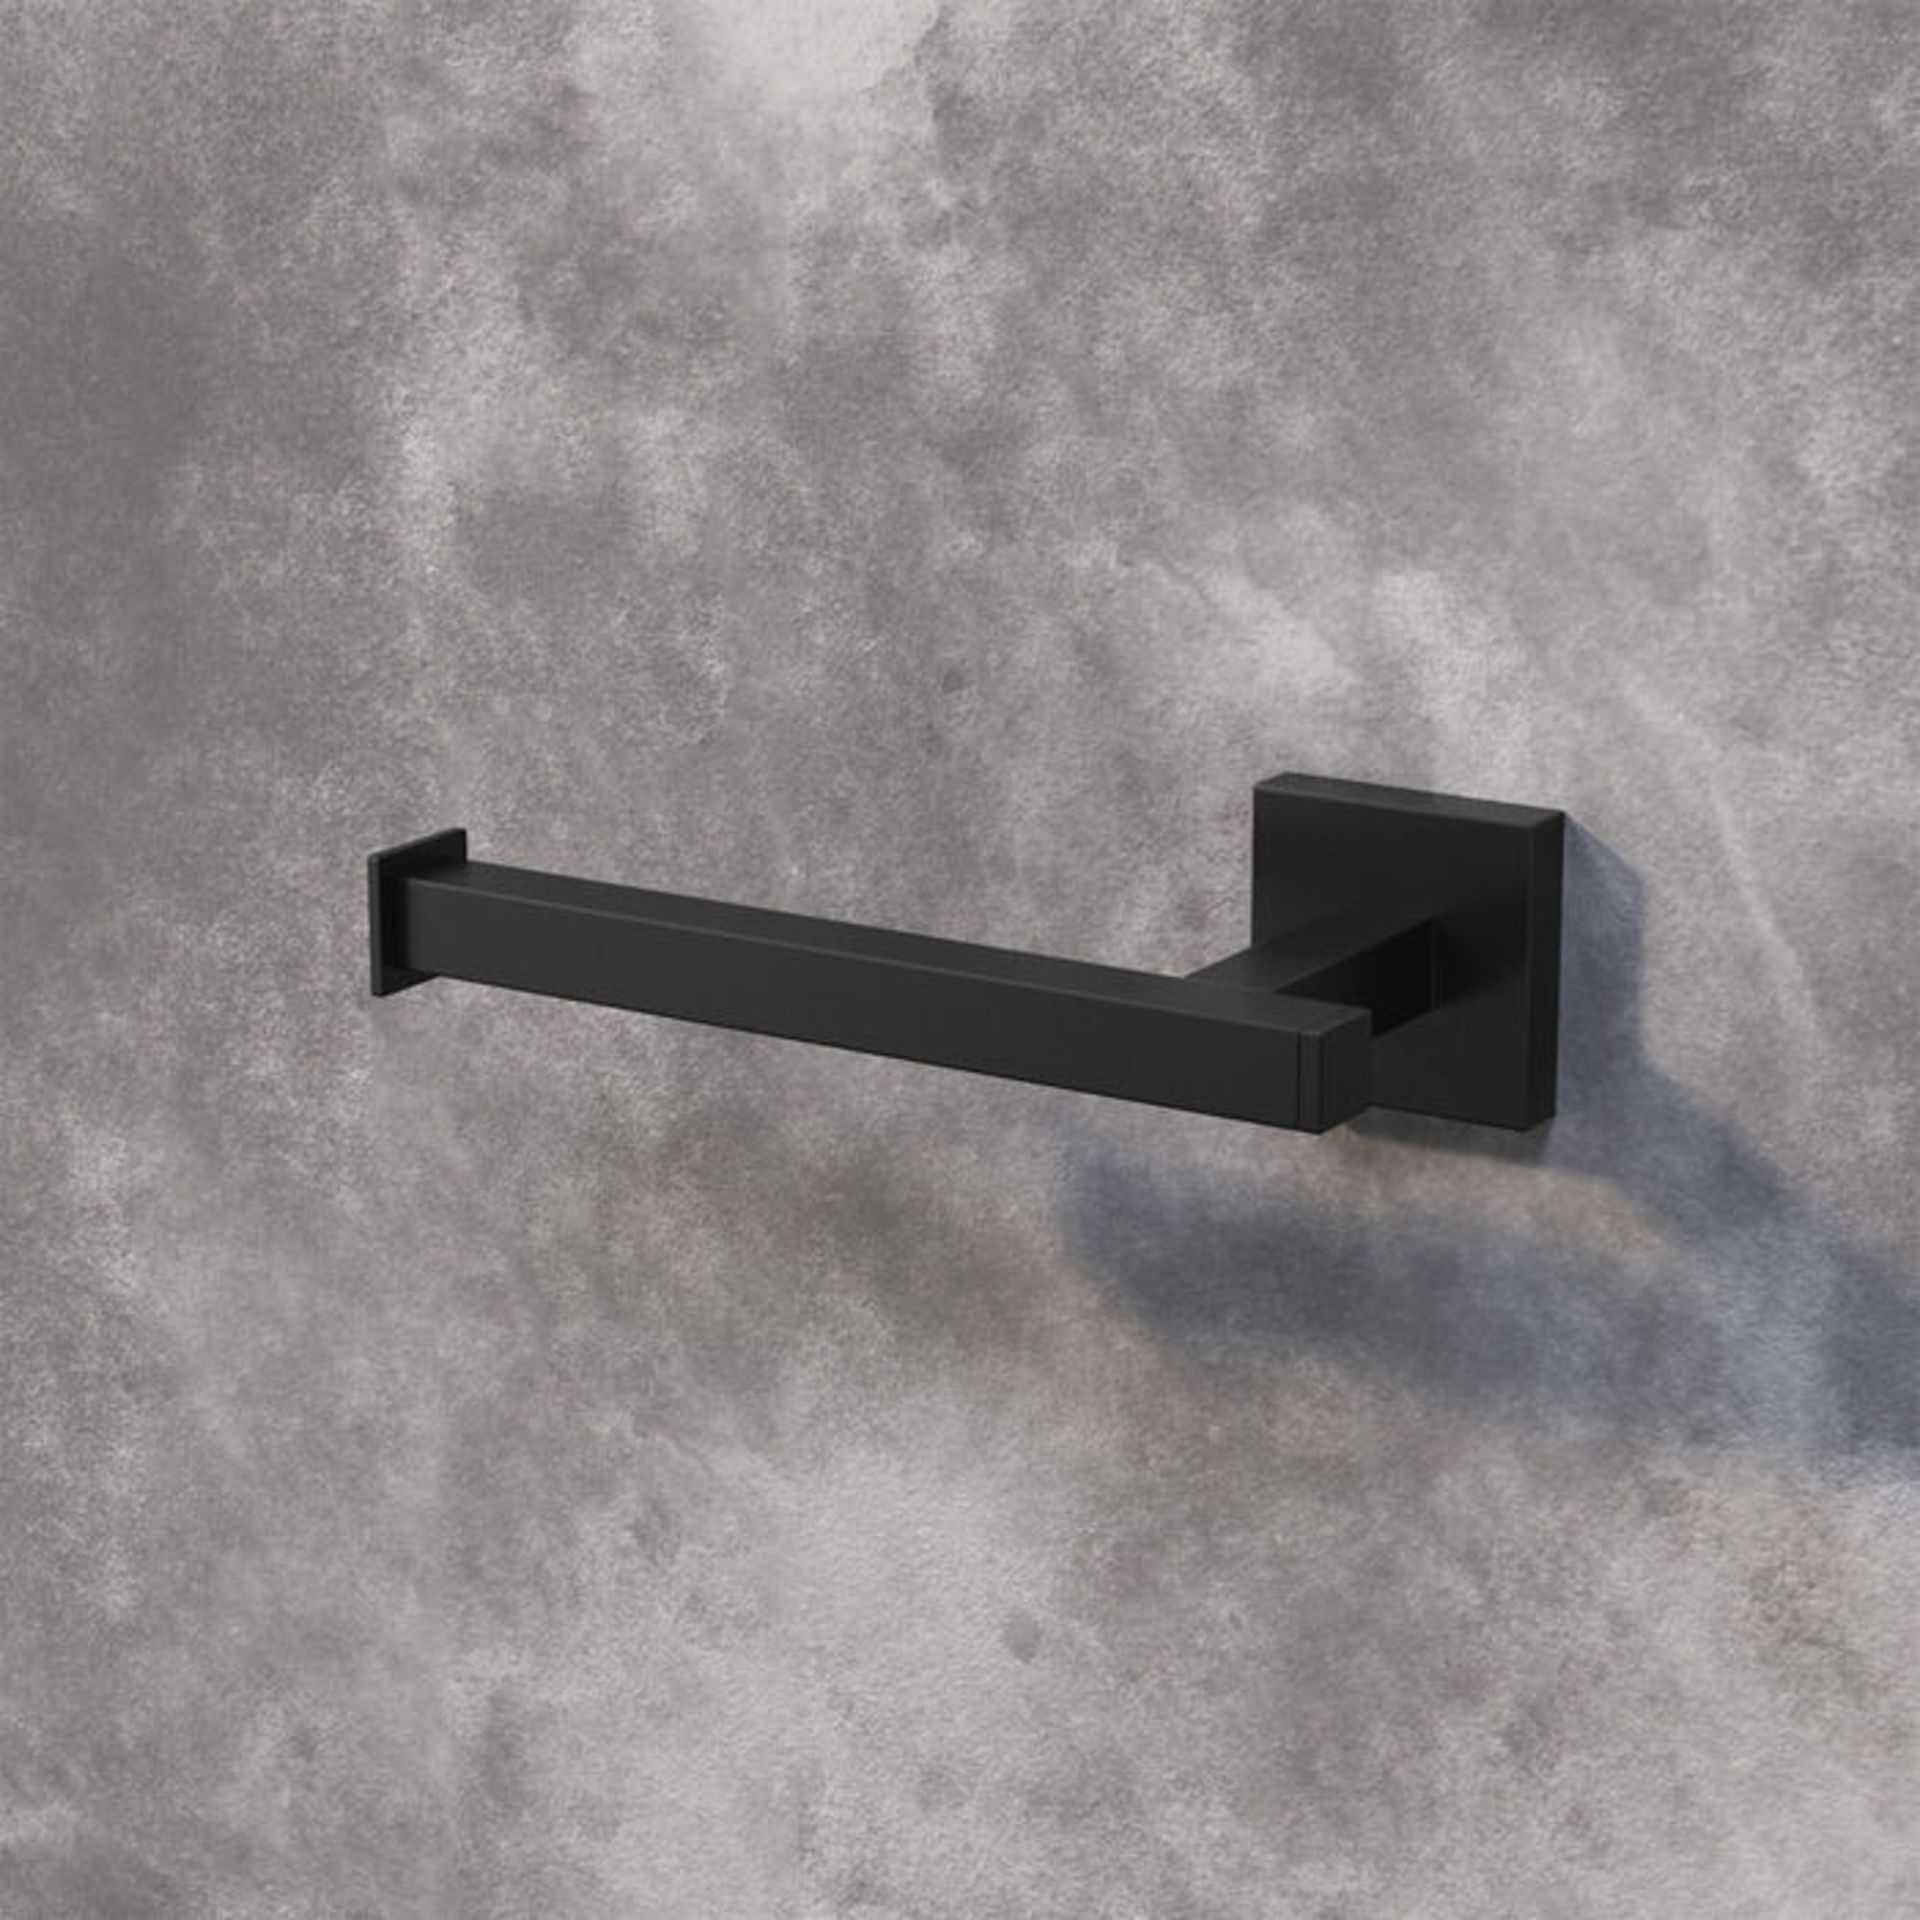 (RK1030) Iker Black Toilet Roll Holder Statement aesthetic for minimalist appeal Luxurious, c...